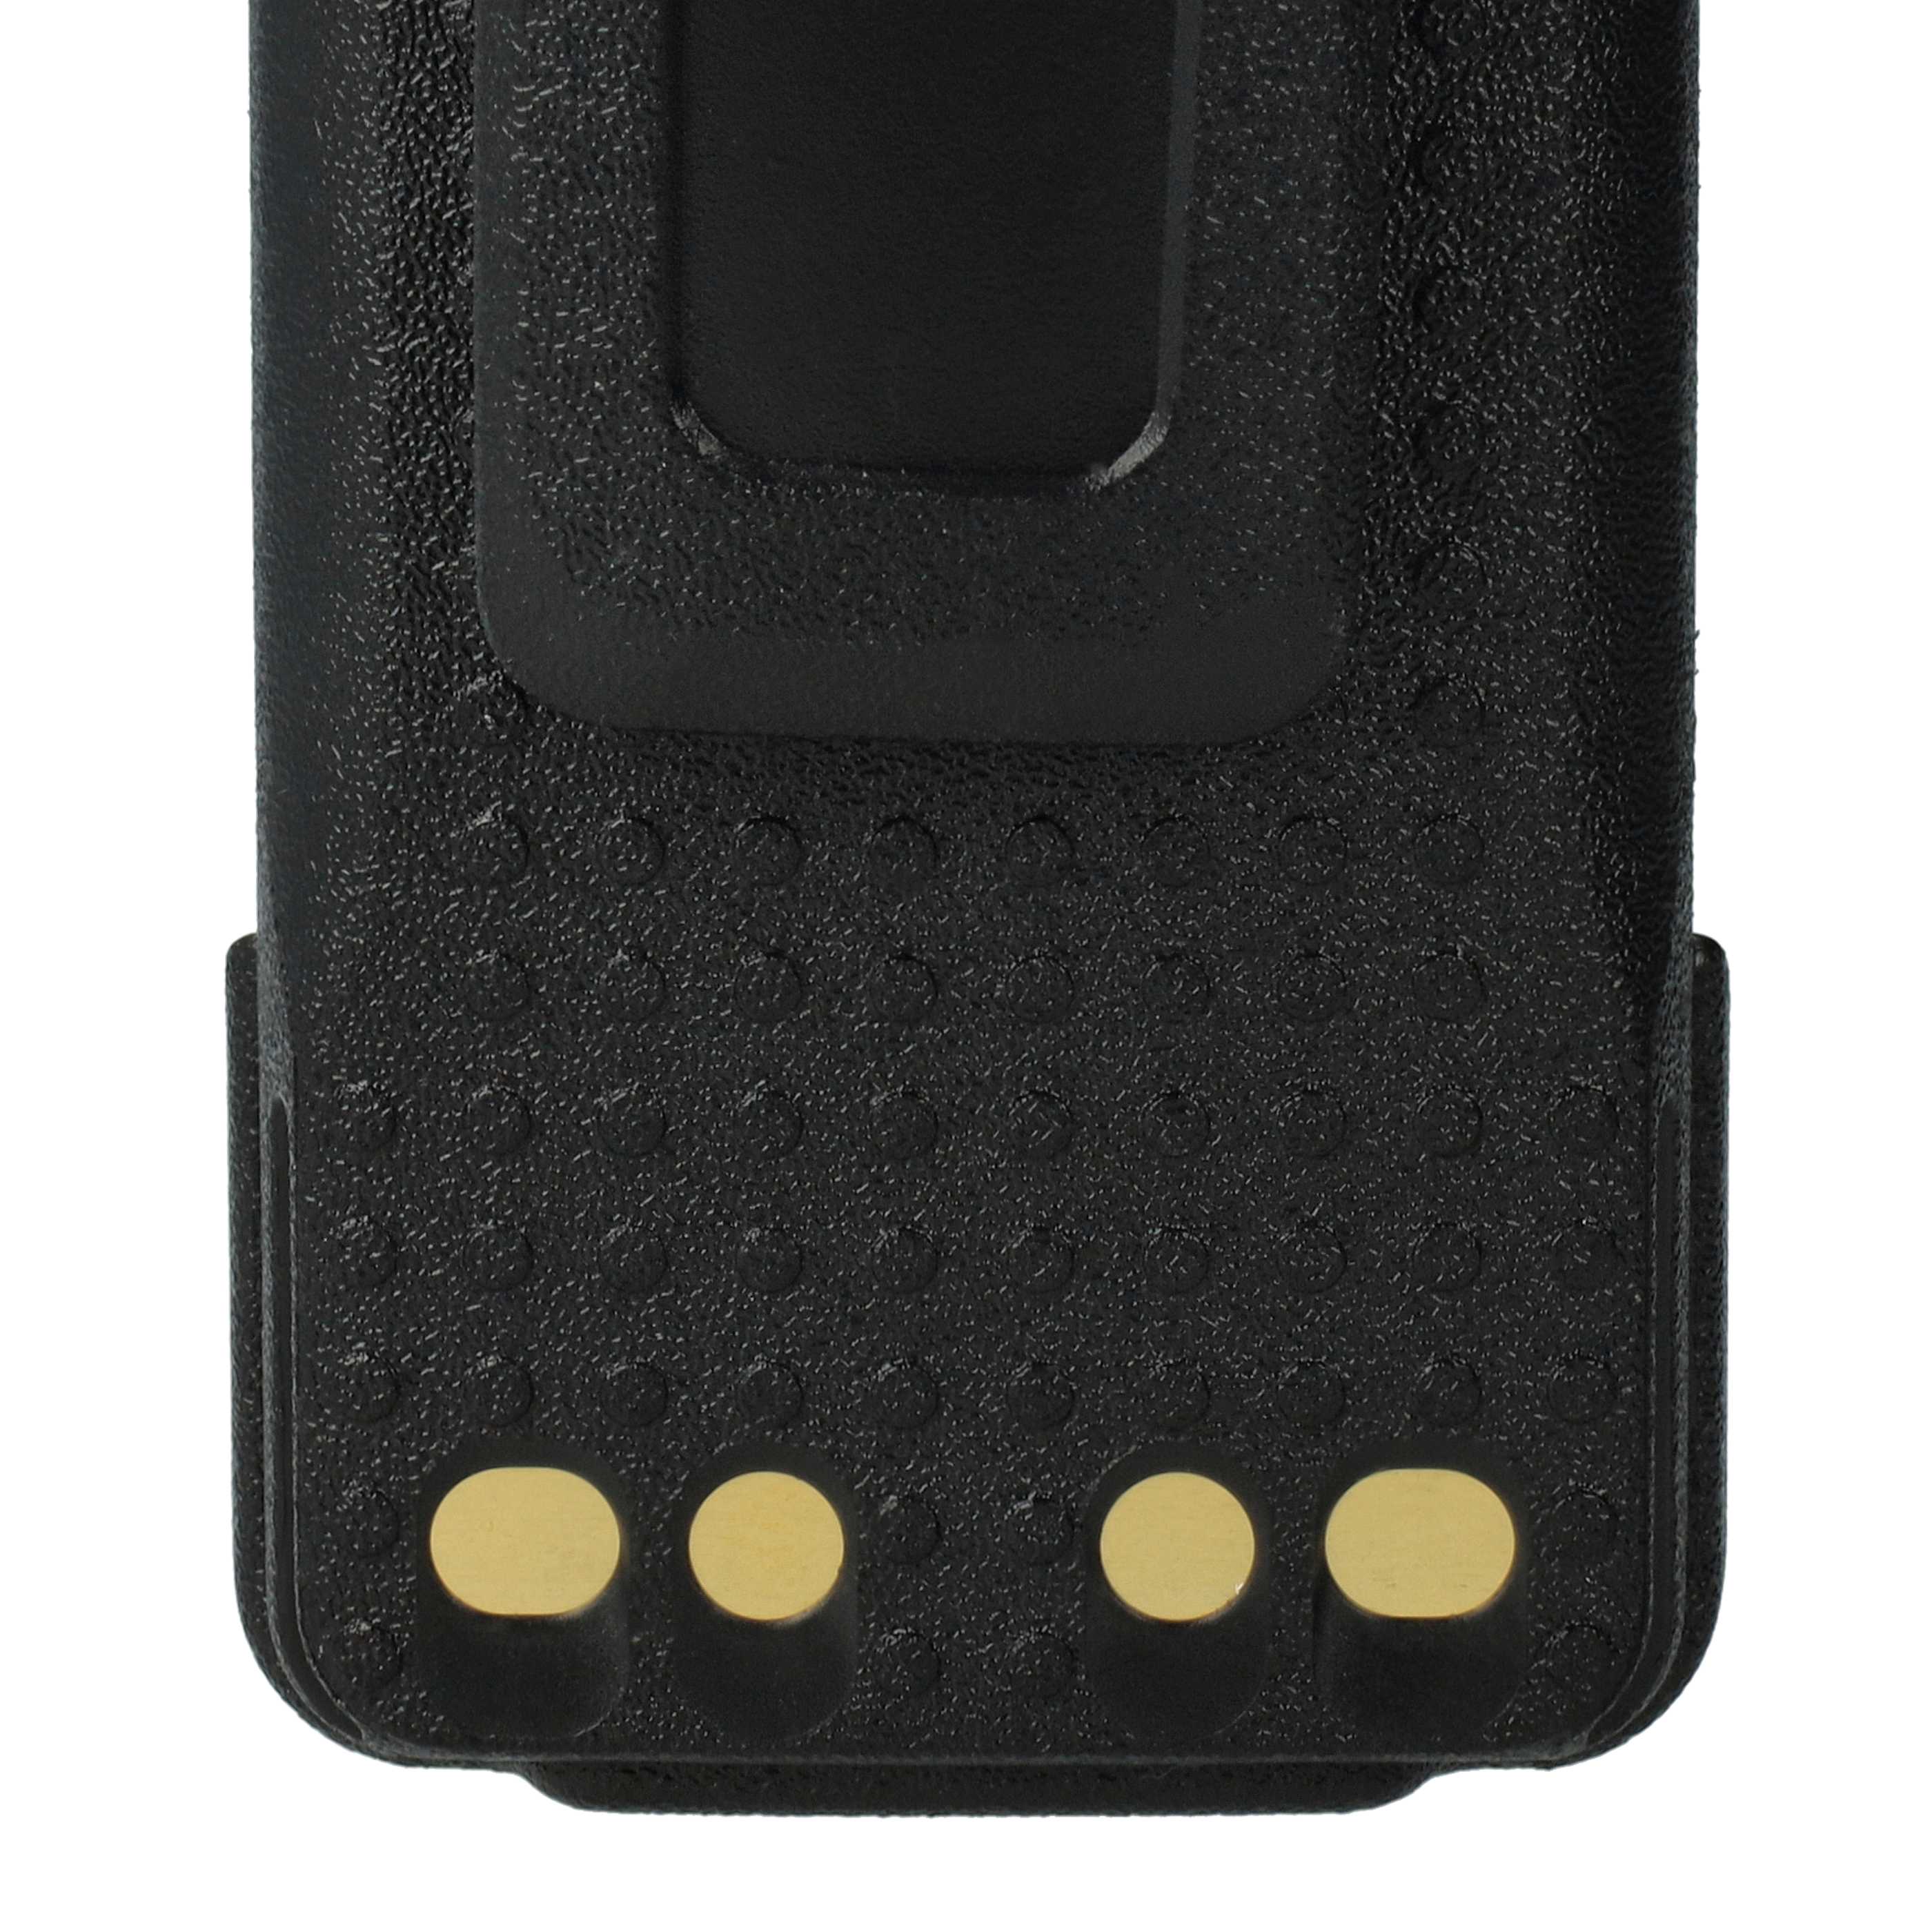 Akumulator do radiotelefonu zamiennik Motorola PMNN4406BR, PMNN4406 - 2200 mAh 7,4 V Li-Ion + klips na pasek